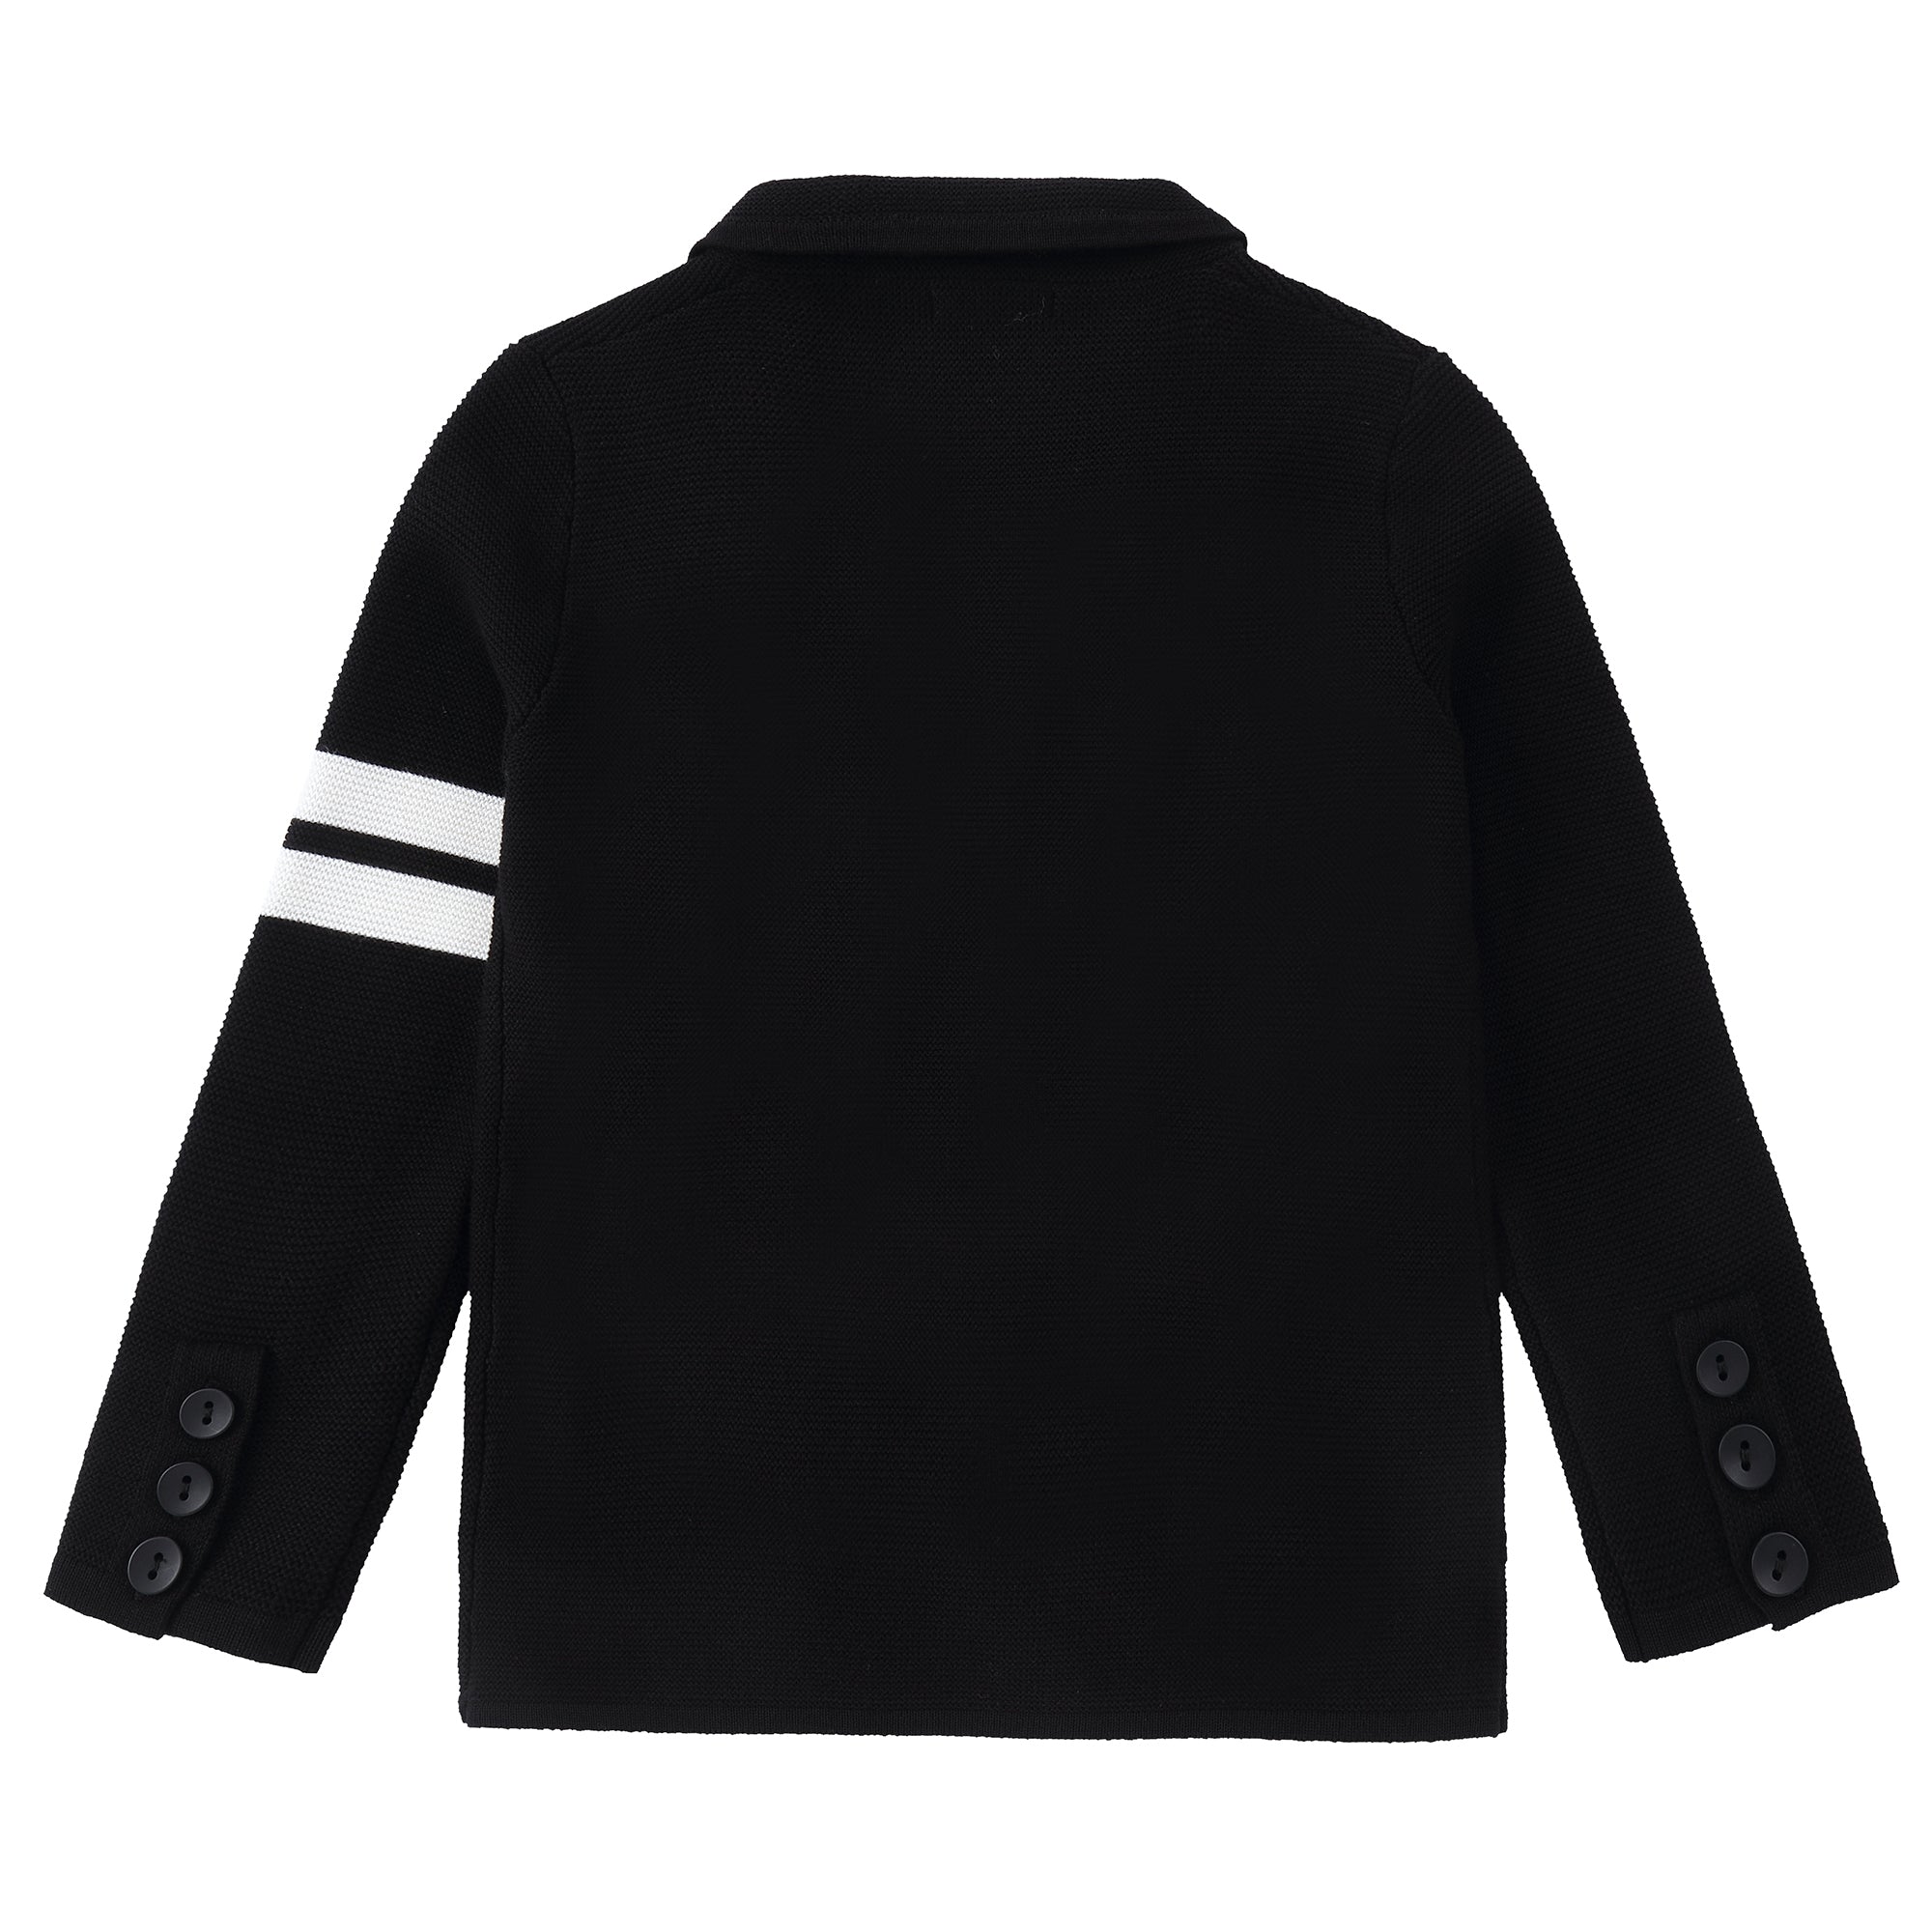 Black Knit Blazer With White Stripe Details